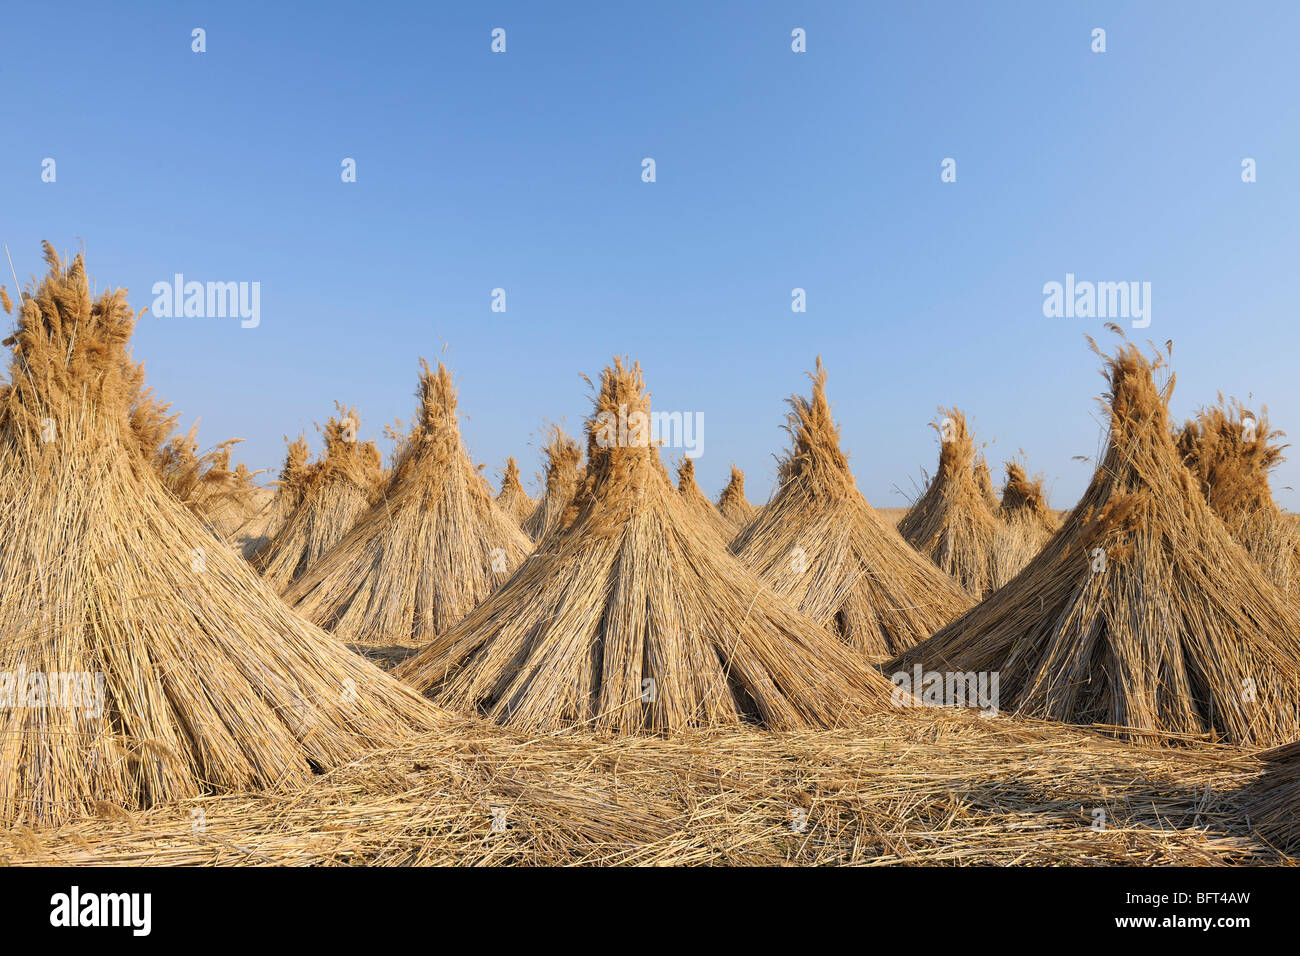 El secado de Reed, Burgenland, Austria Foto de stock